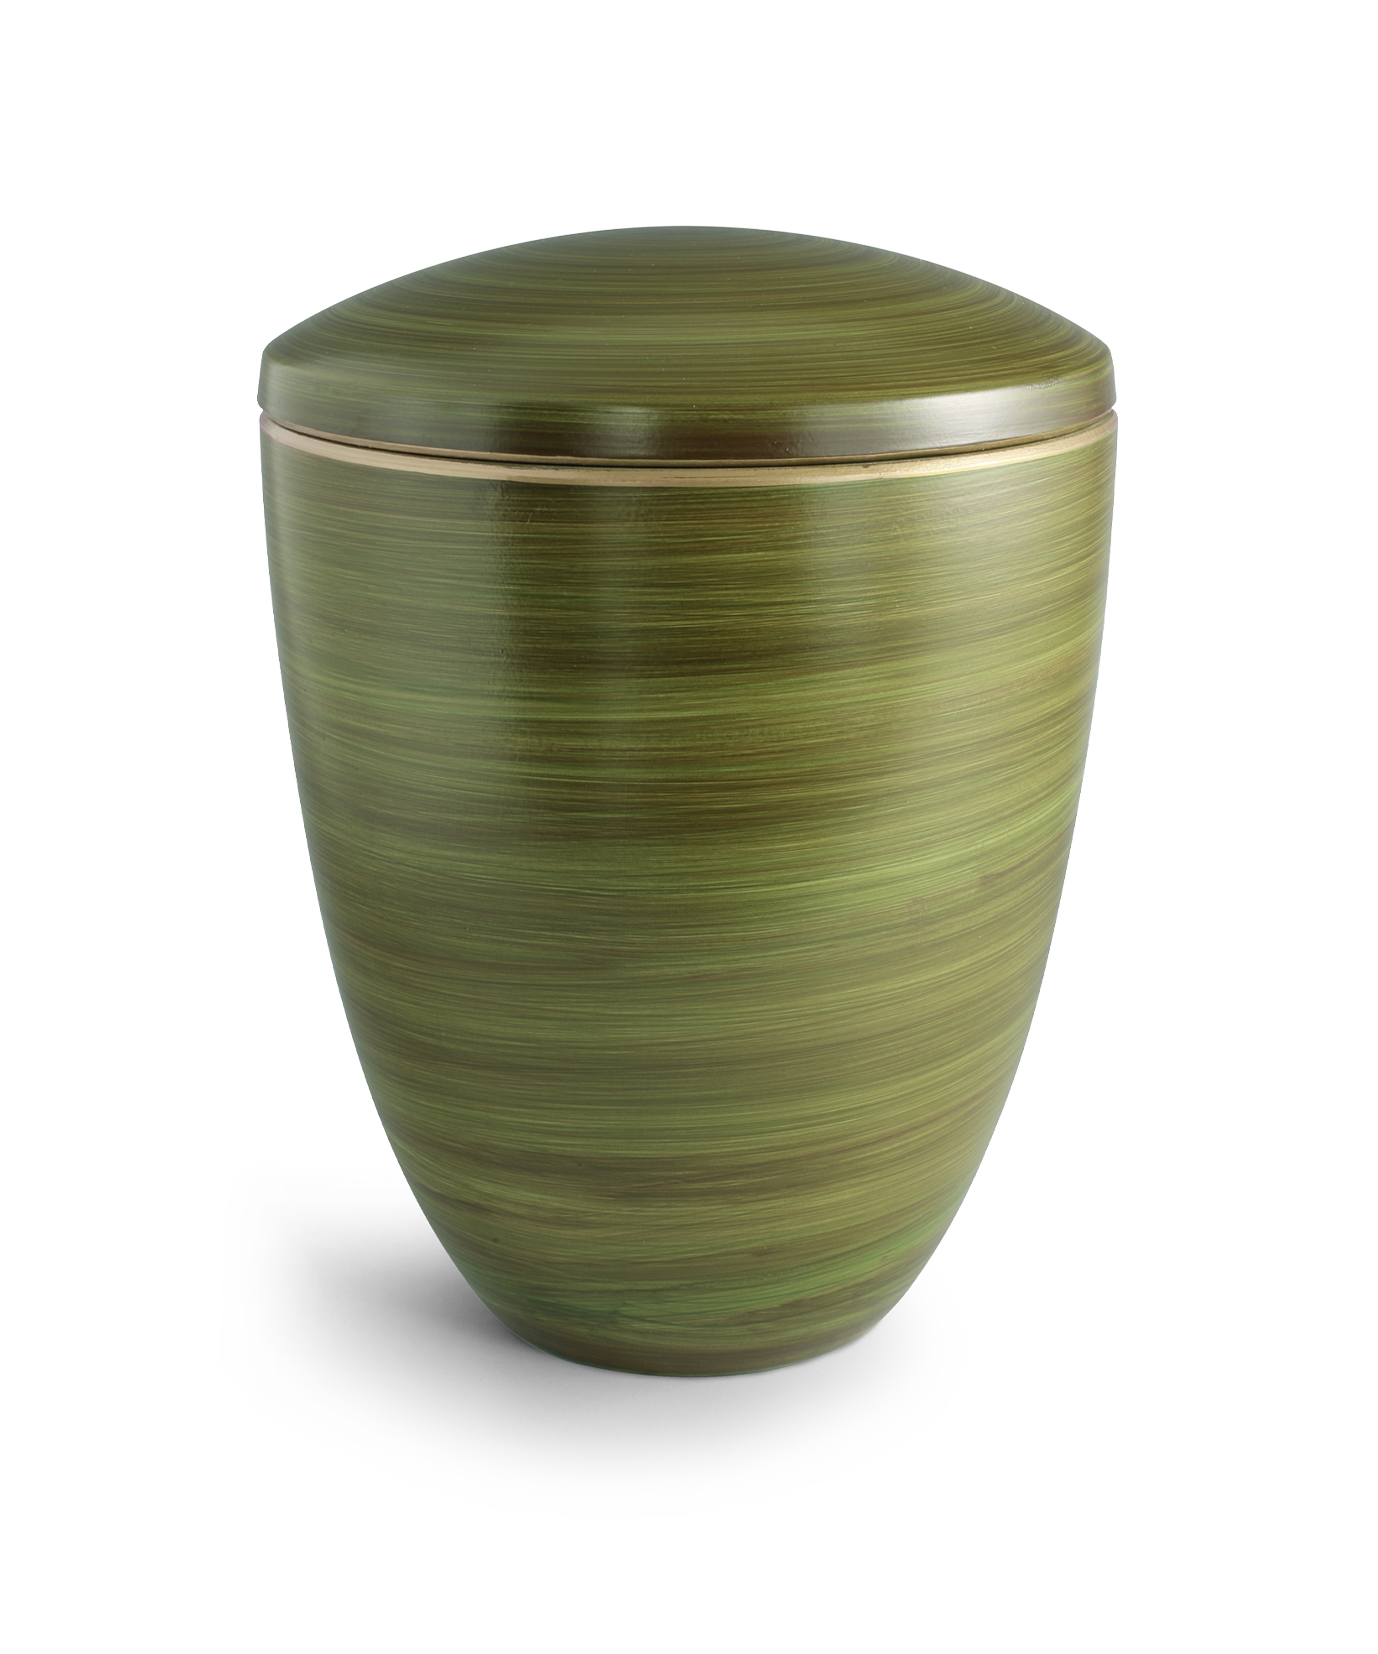 Völsing Urne Edition Ceramica Keramik